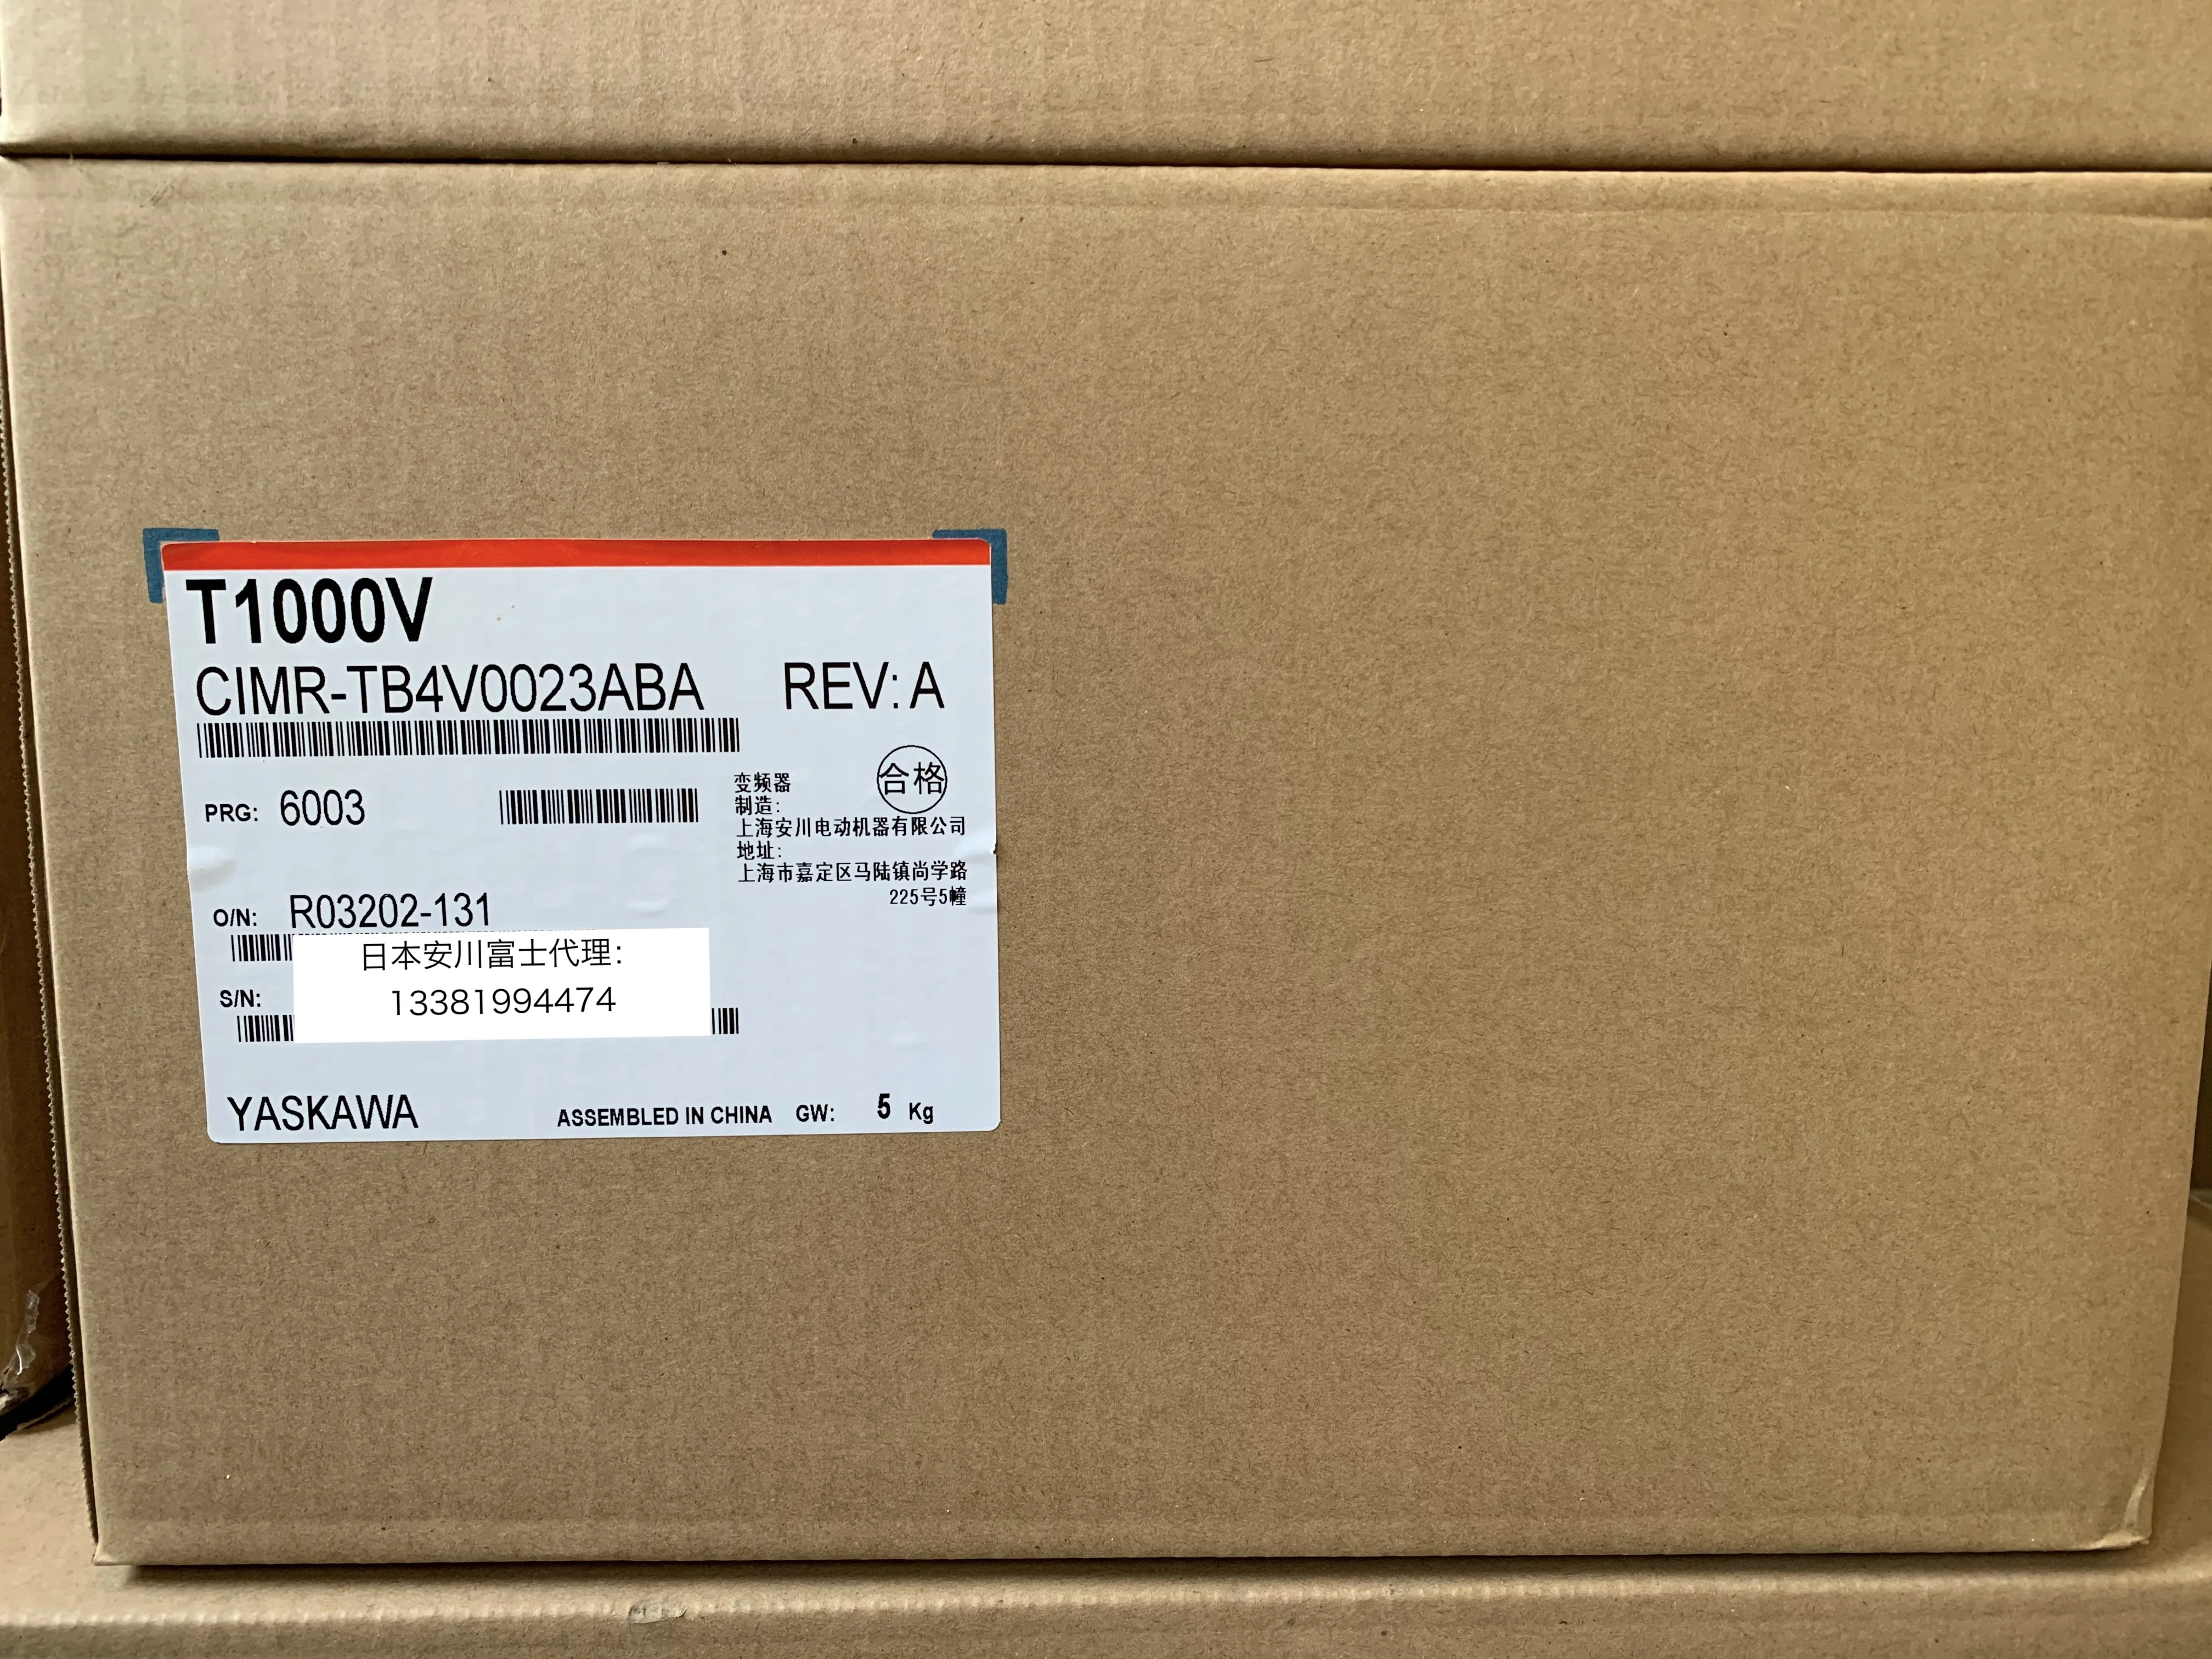 

Brand-new Original An Chuan Inverter Special T1000V Series CIMR-TB4V0023ABA 7.5kw